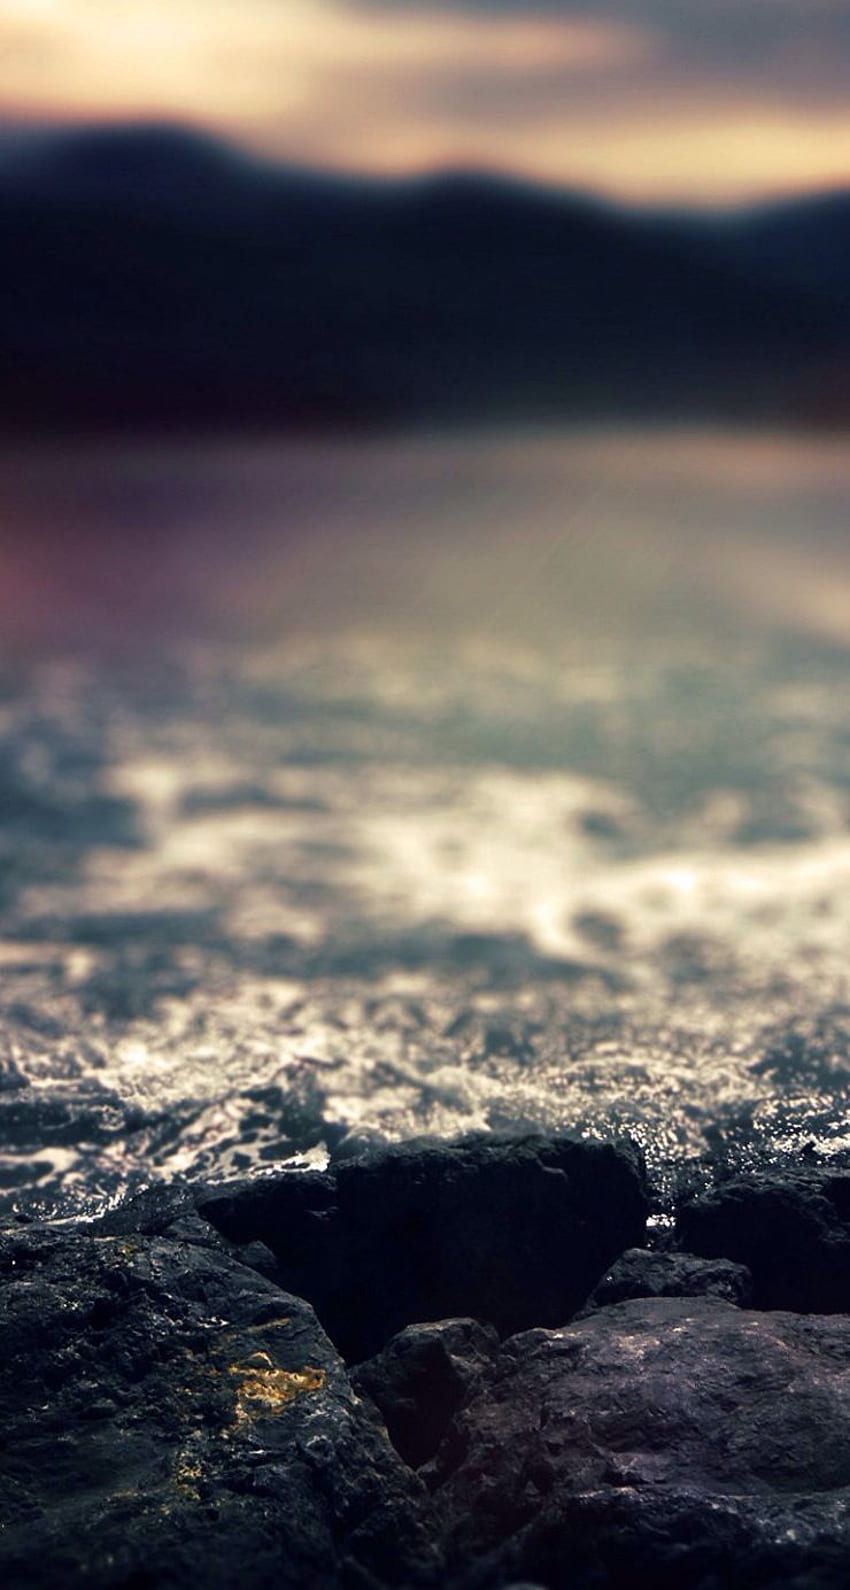 Water Rocks Blur iOS7 iPhone 5 . Latar belakang iPhone 6, iPhone 5 , iPhone terbaik wallpaper ponsel HD